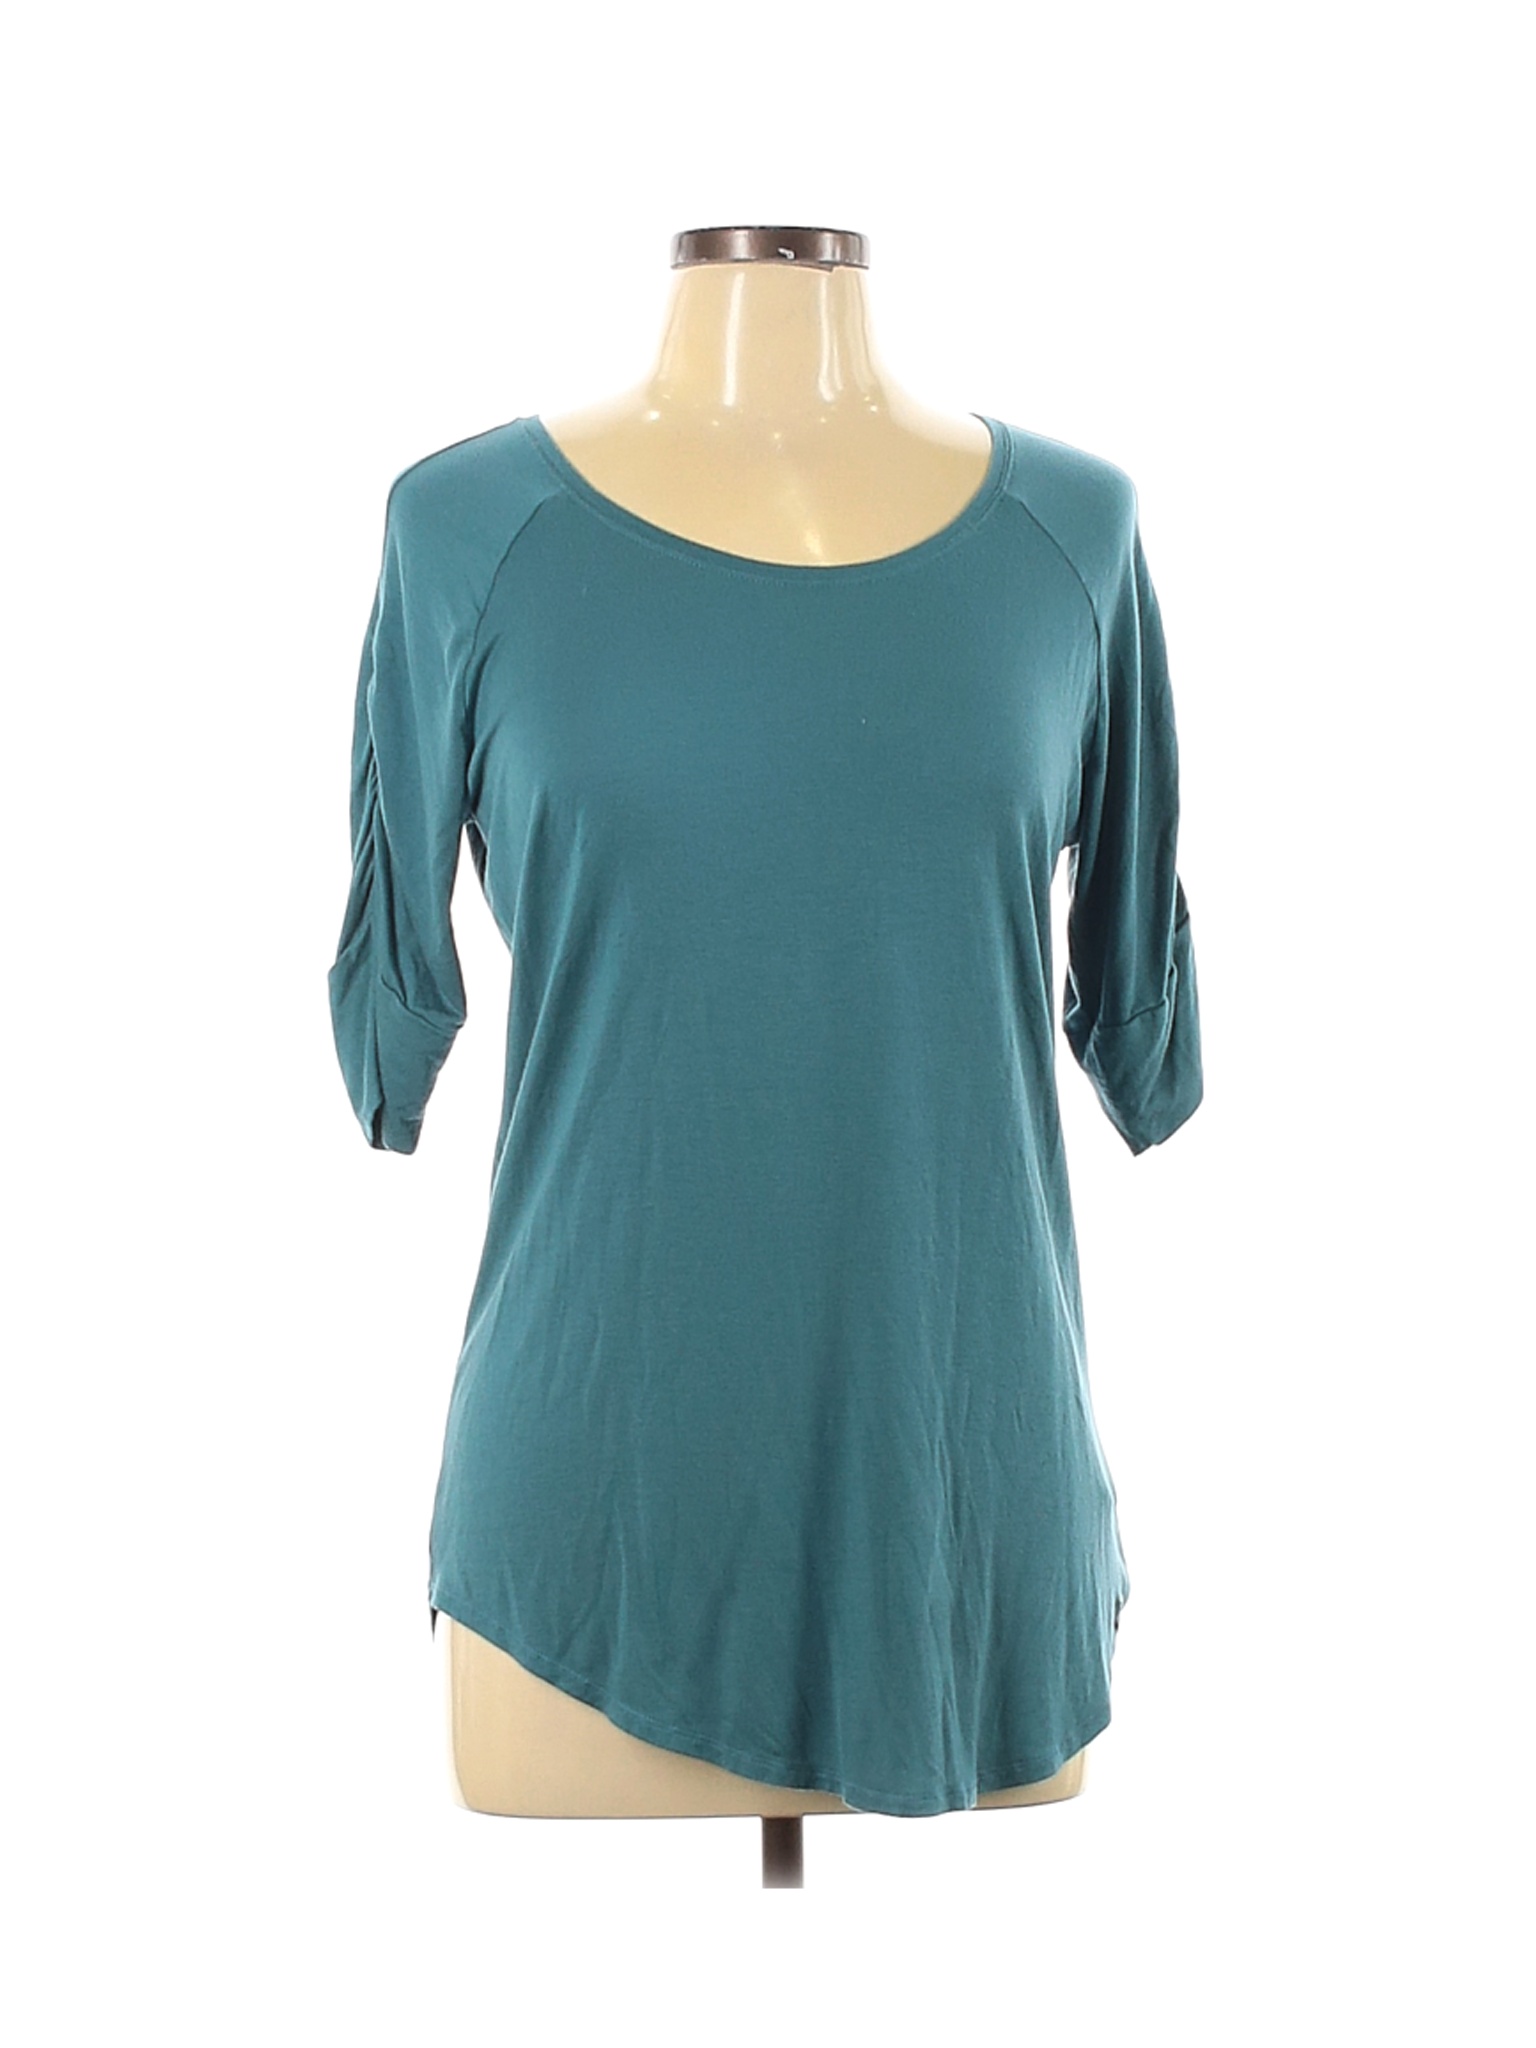 Columbia Women Green Short Sleeve T-Shirt L | eBay